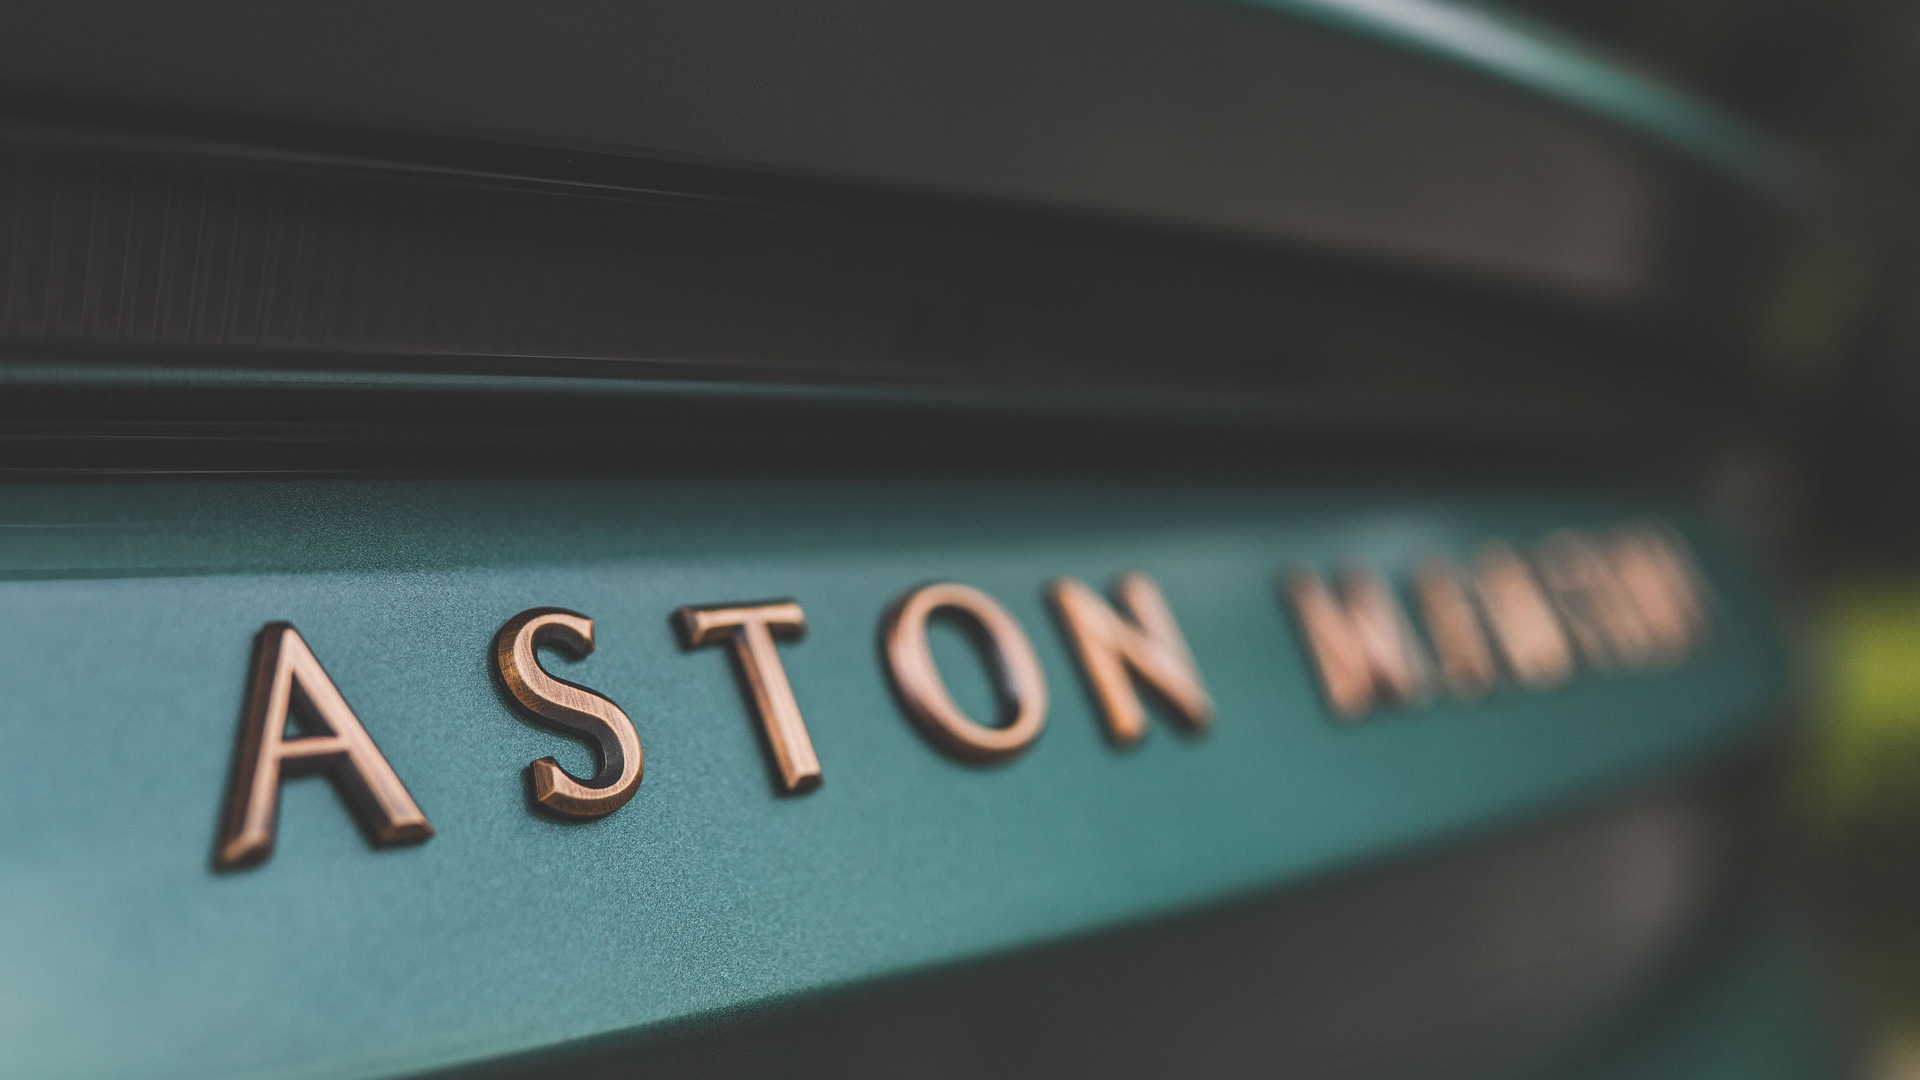 2019 Aston Martin DBS 59